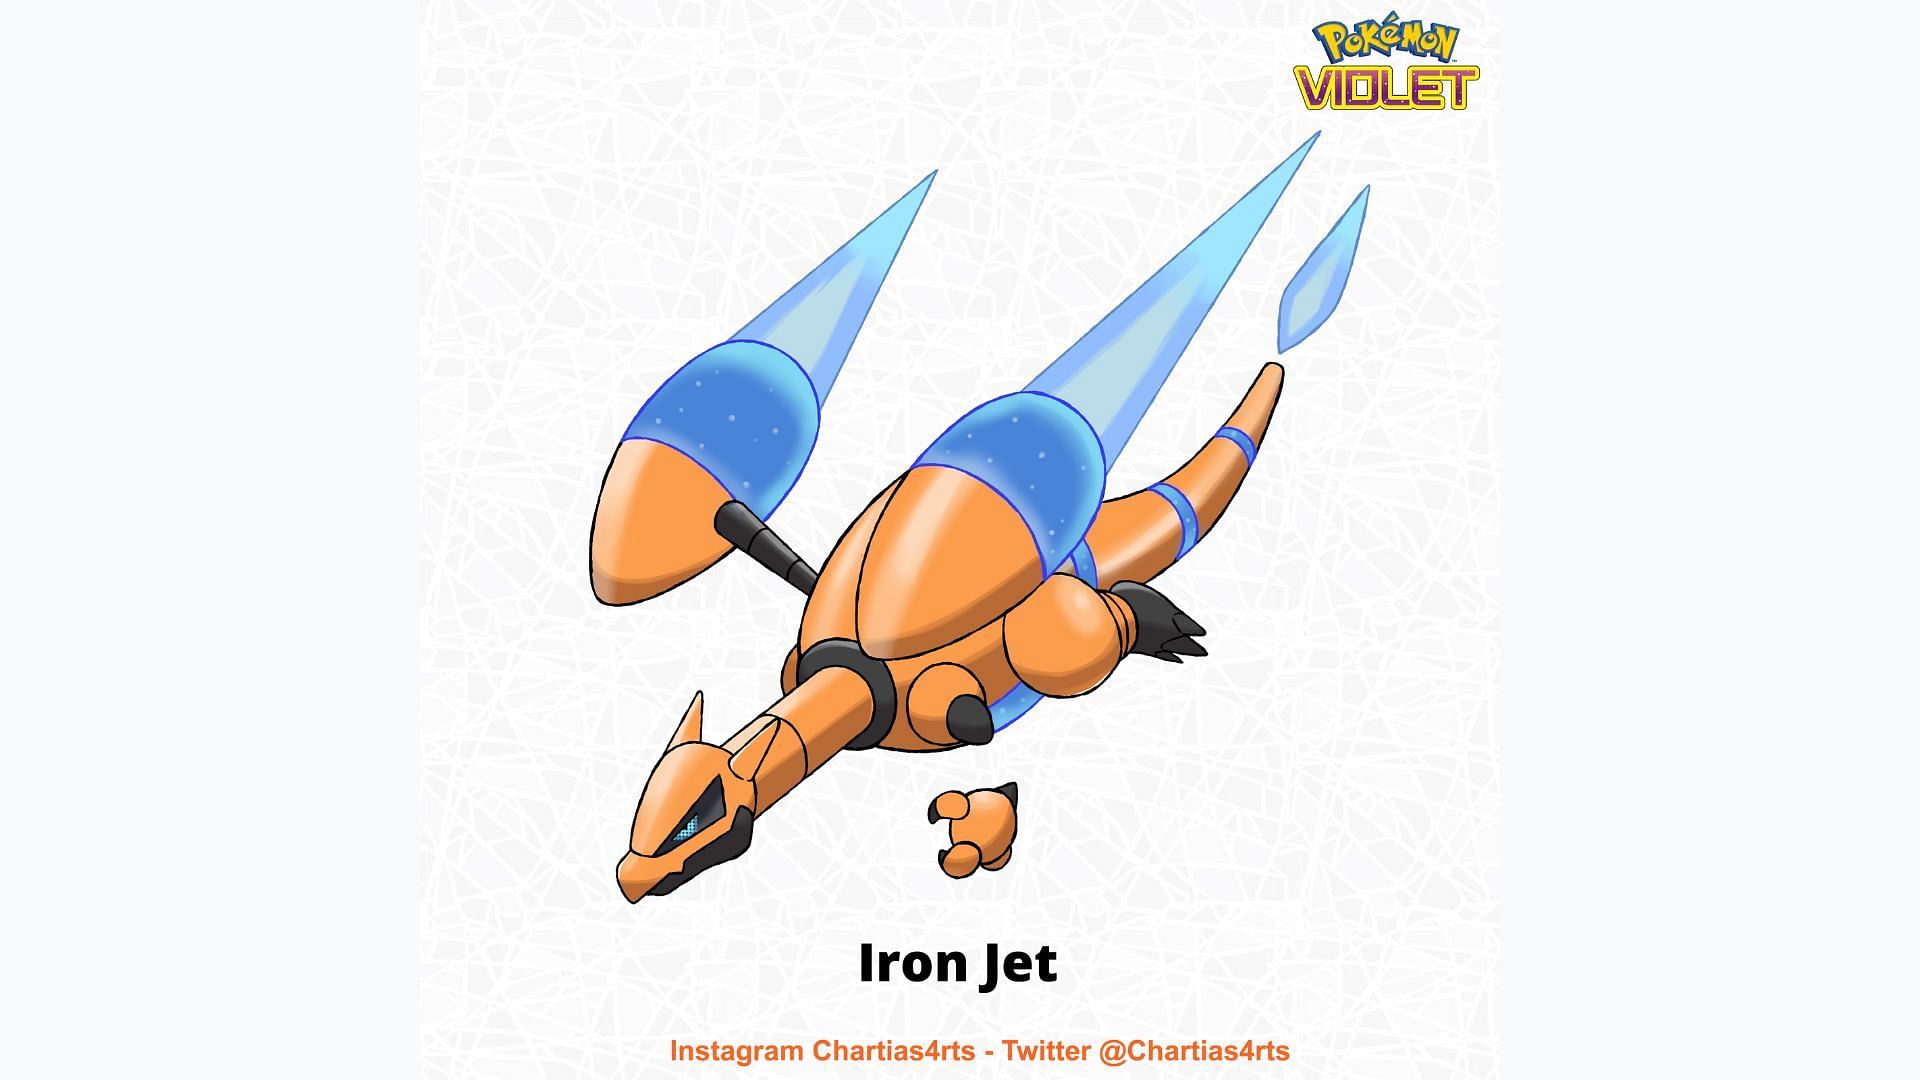 Iron Jet (Image via Chartias4rts)